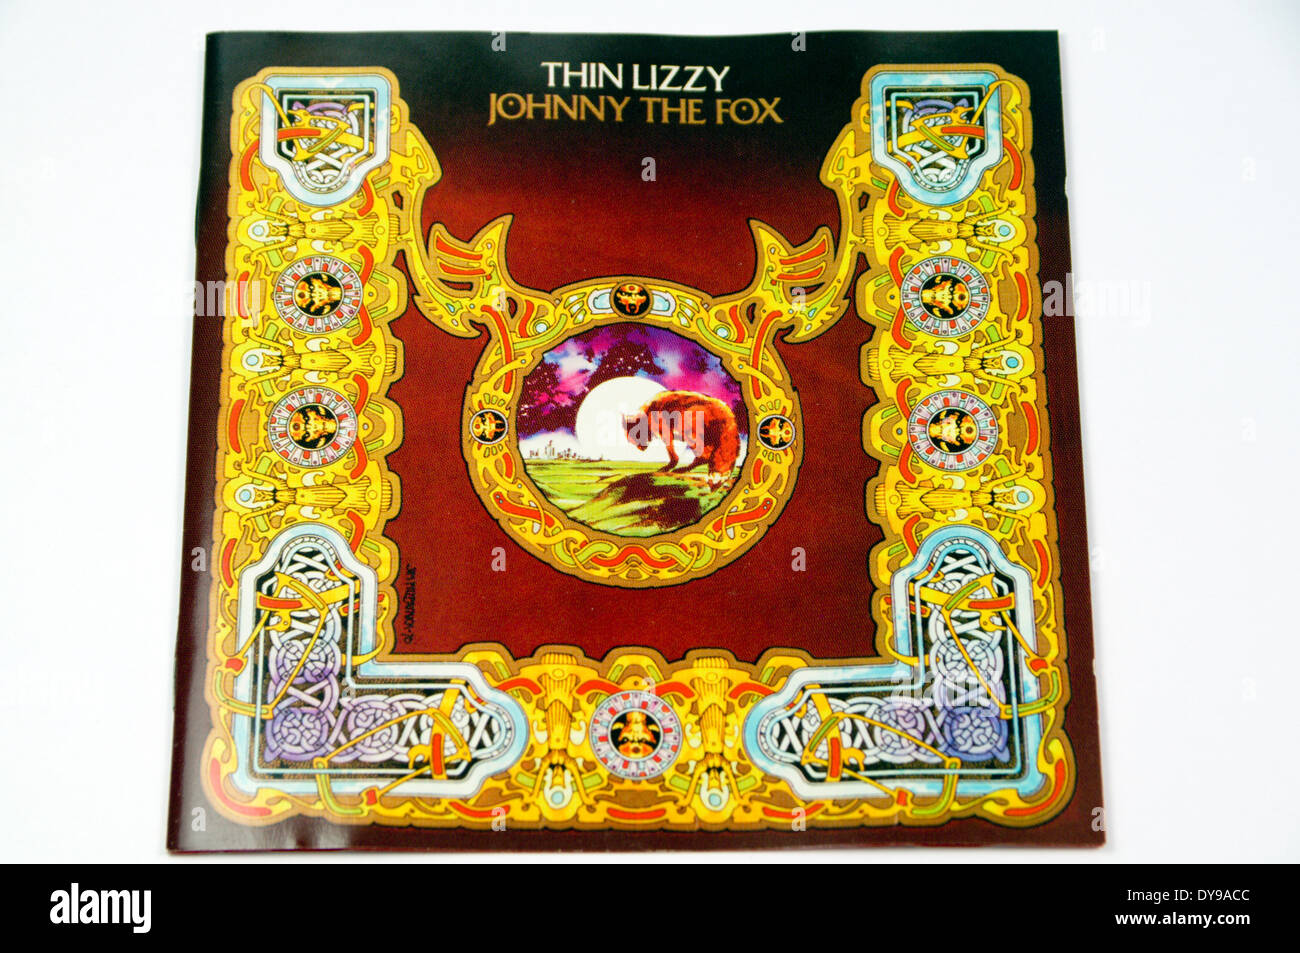 Thin Lizzy 'Johnny the Fox' Album Stock Photo